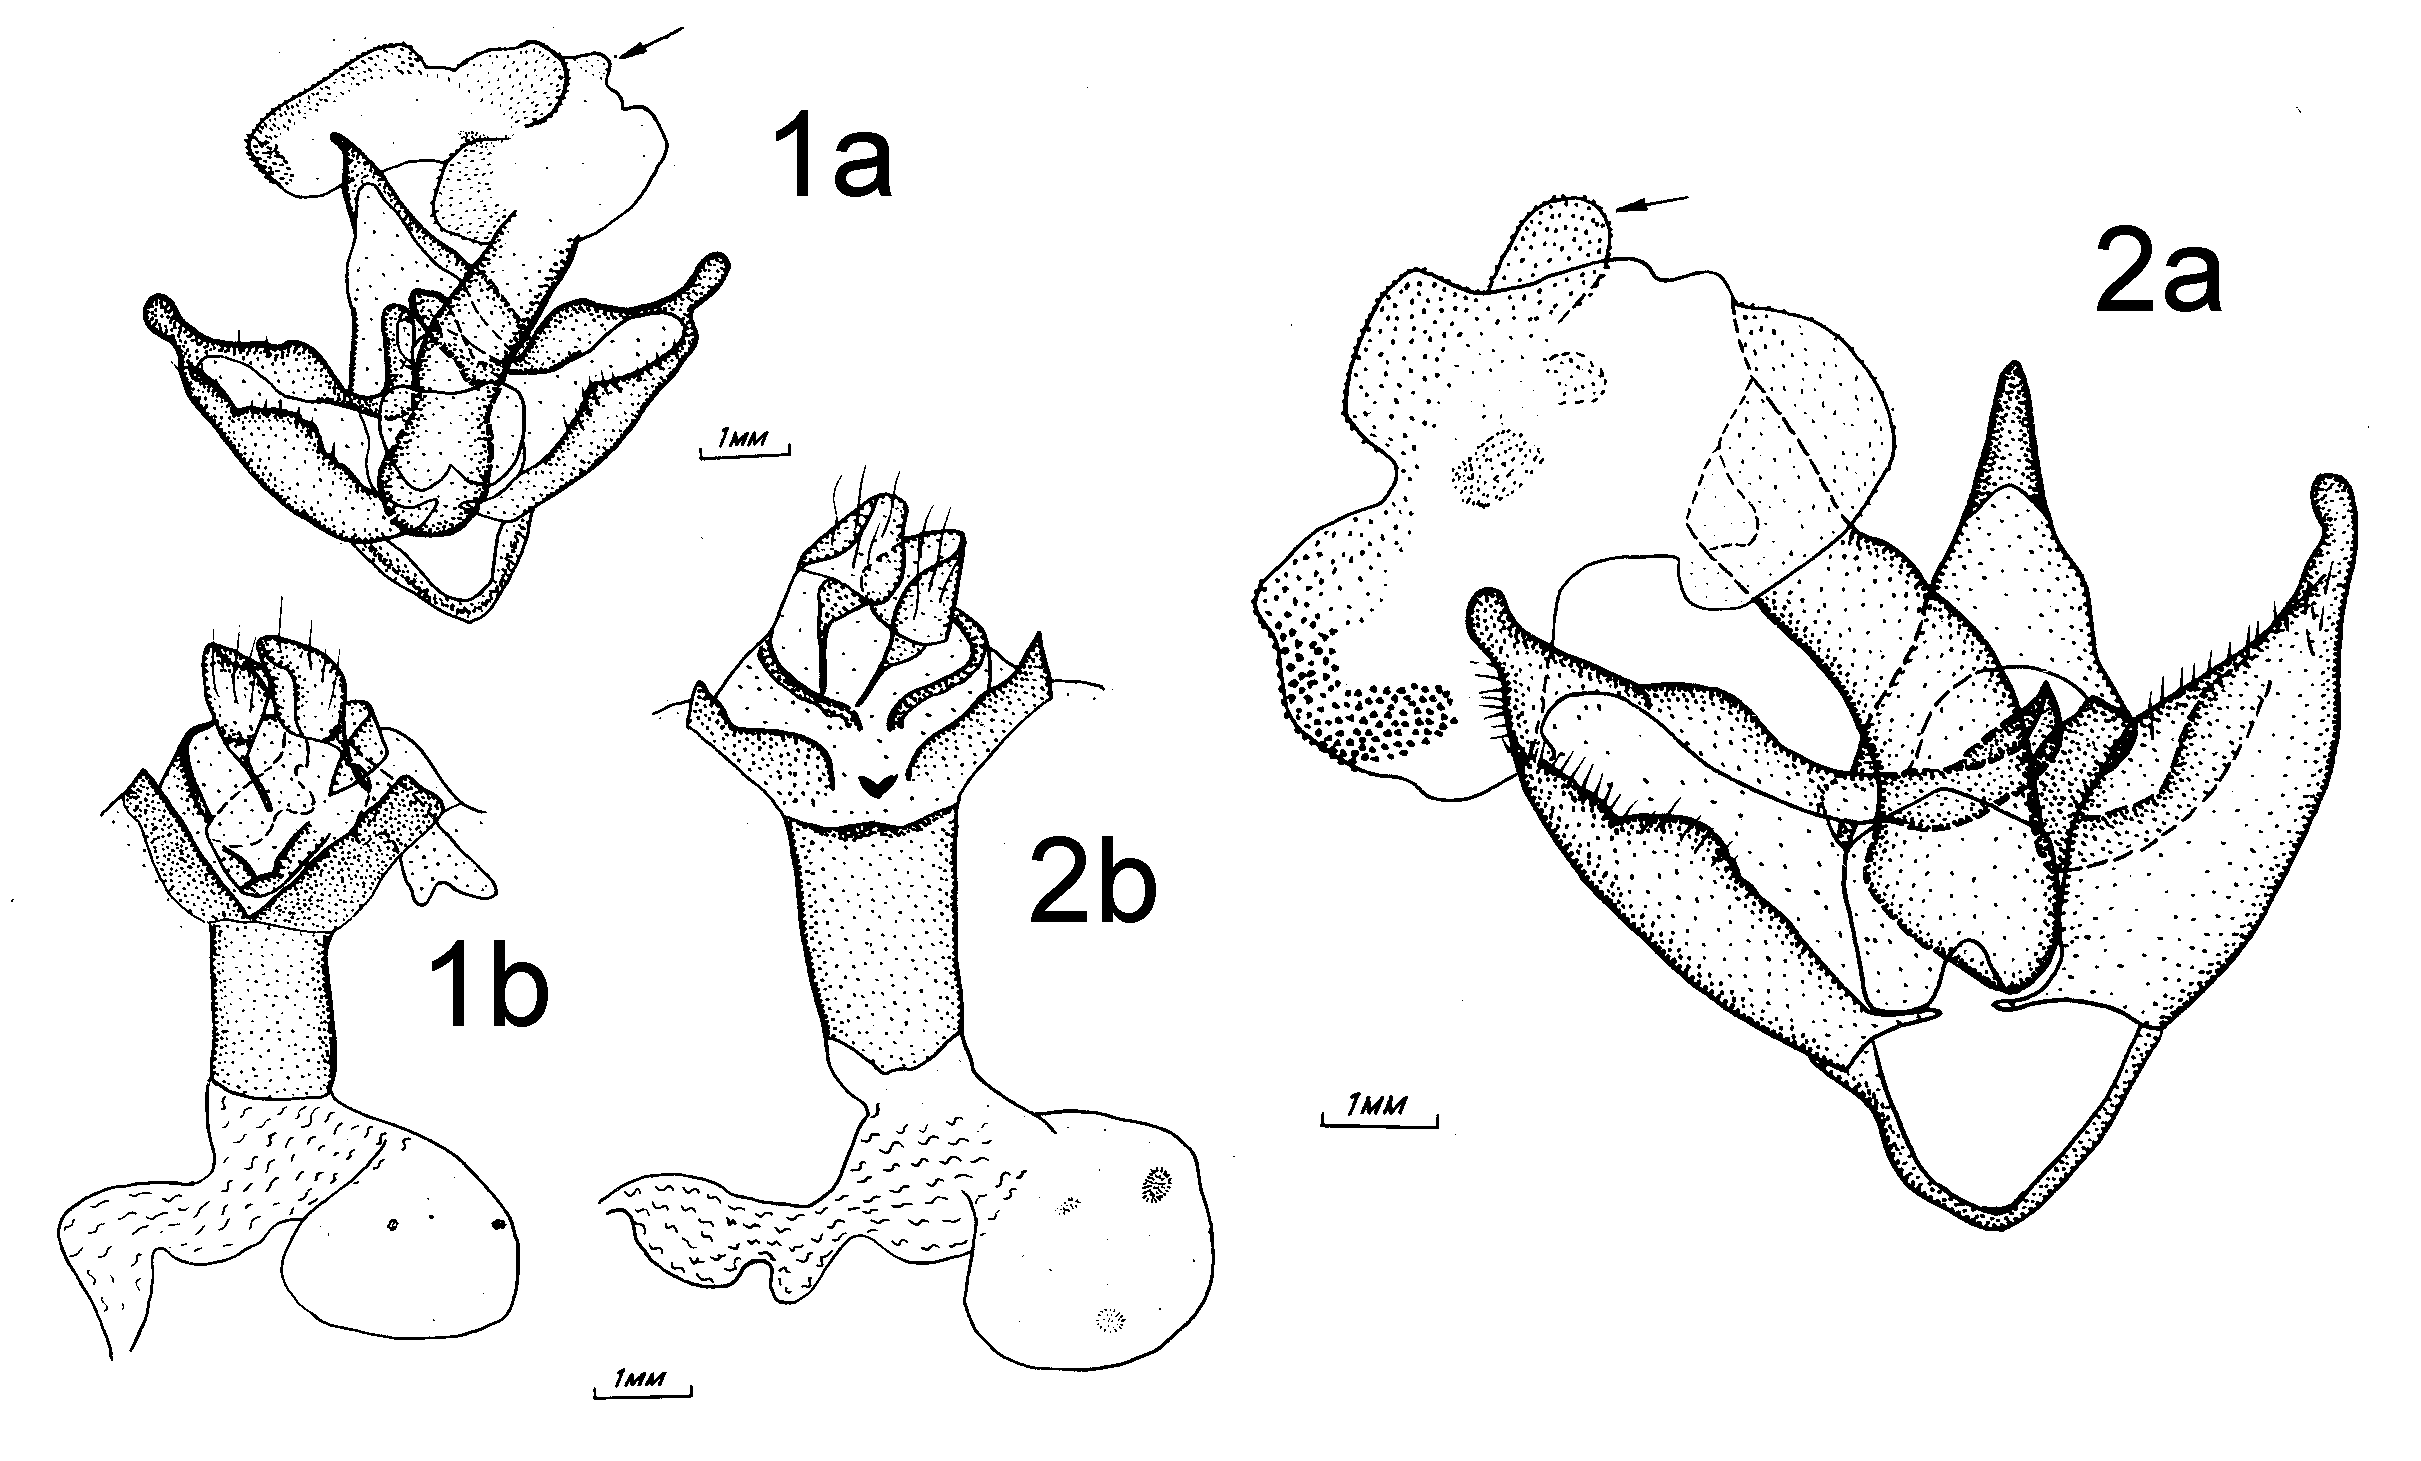 Arctia olschwangi and Arctia caja, male and female genitalia structure